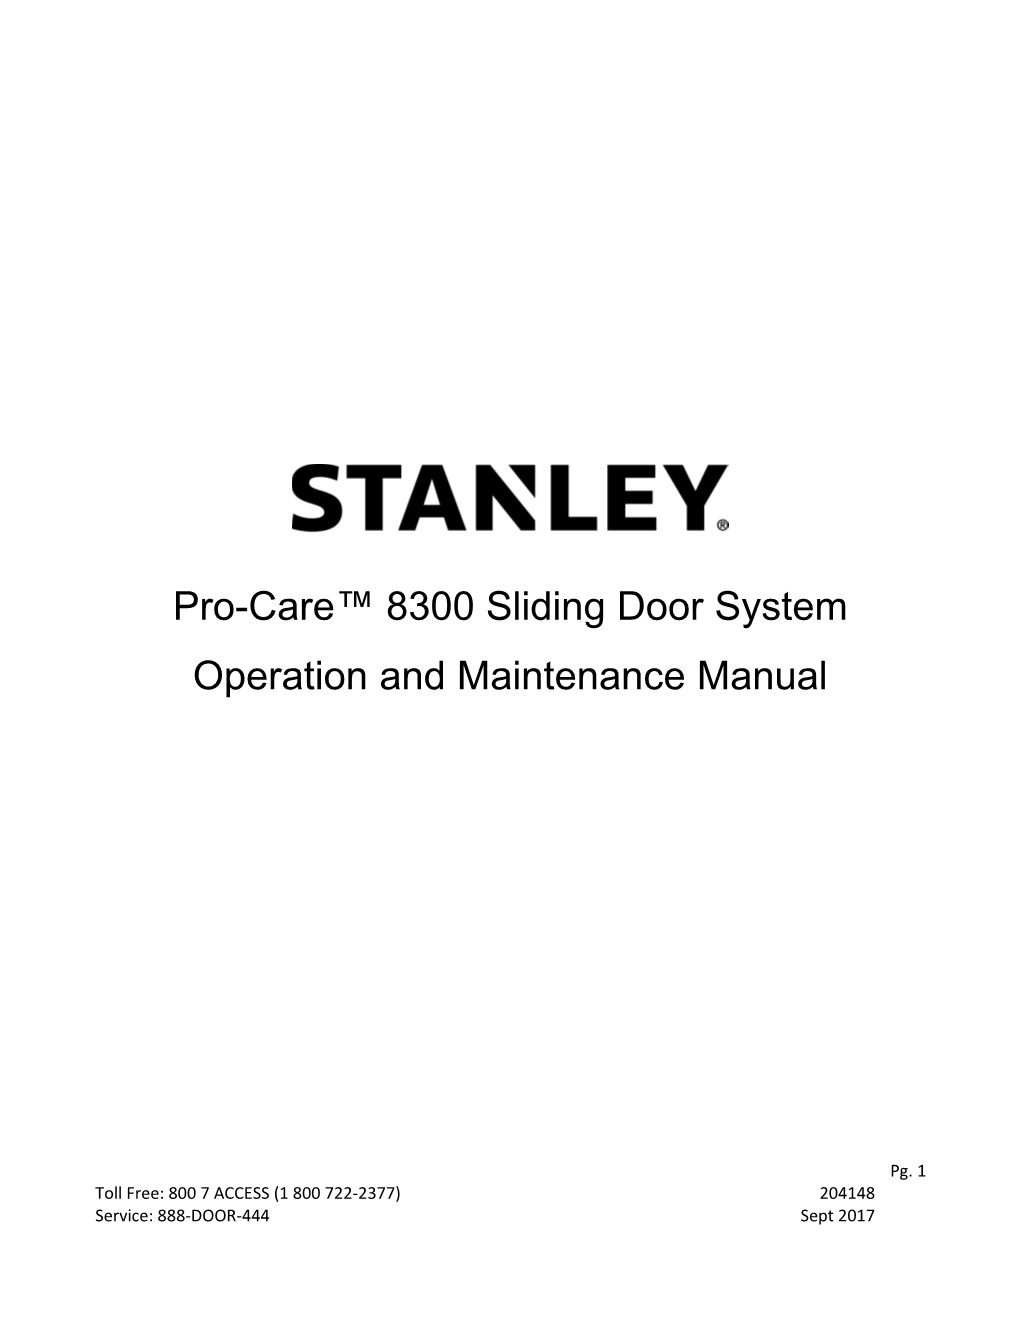 Pro-Care 8300 Sliding Door System